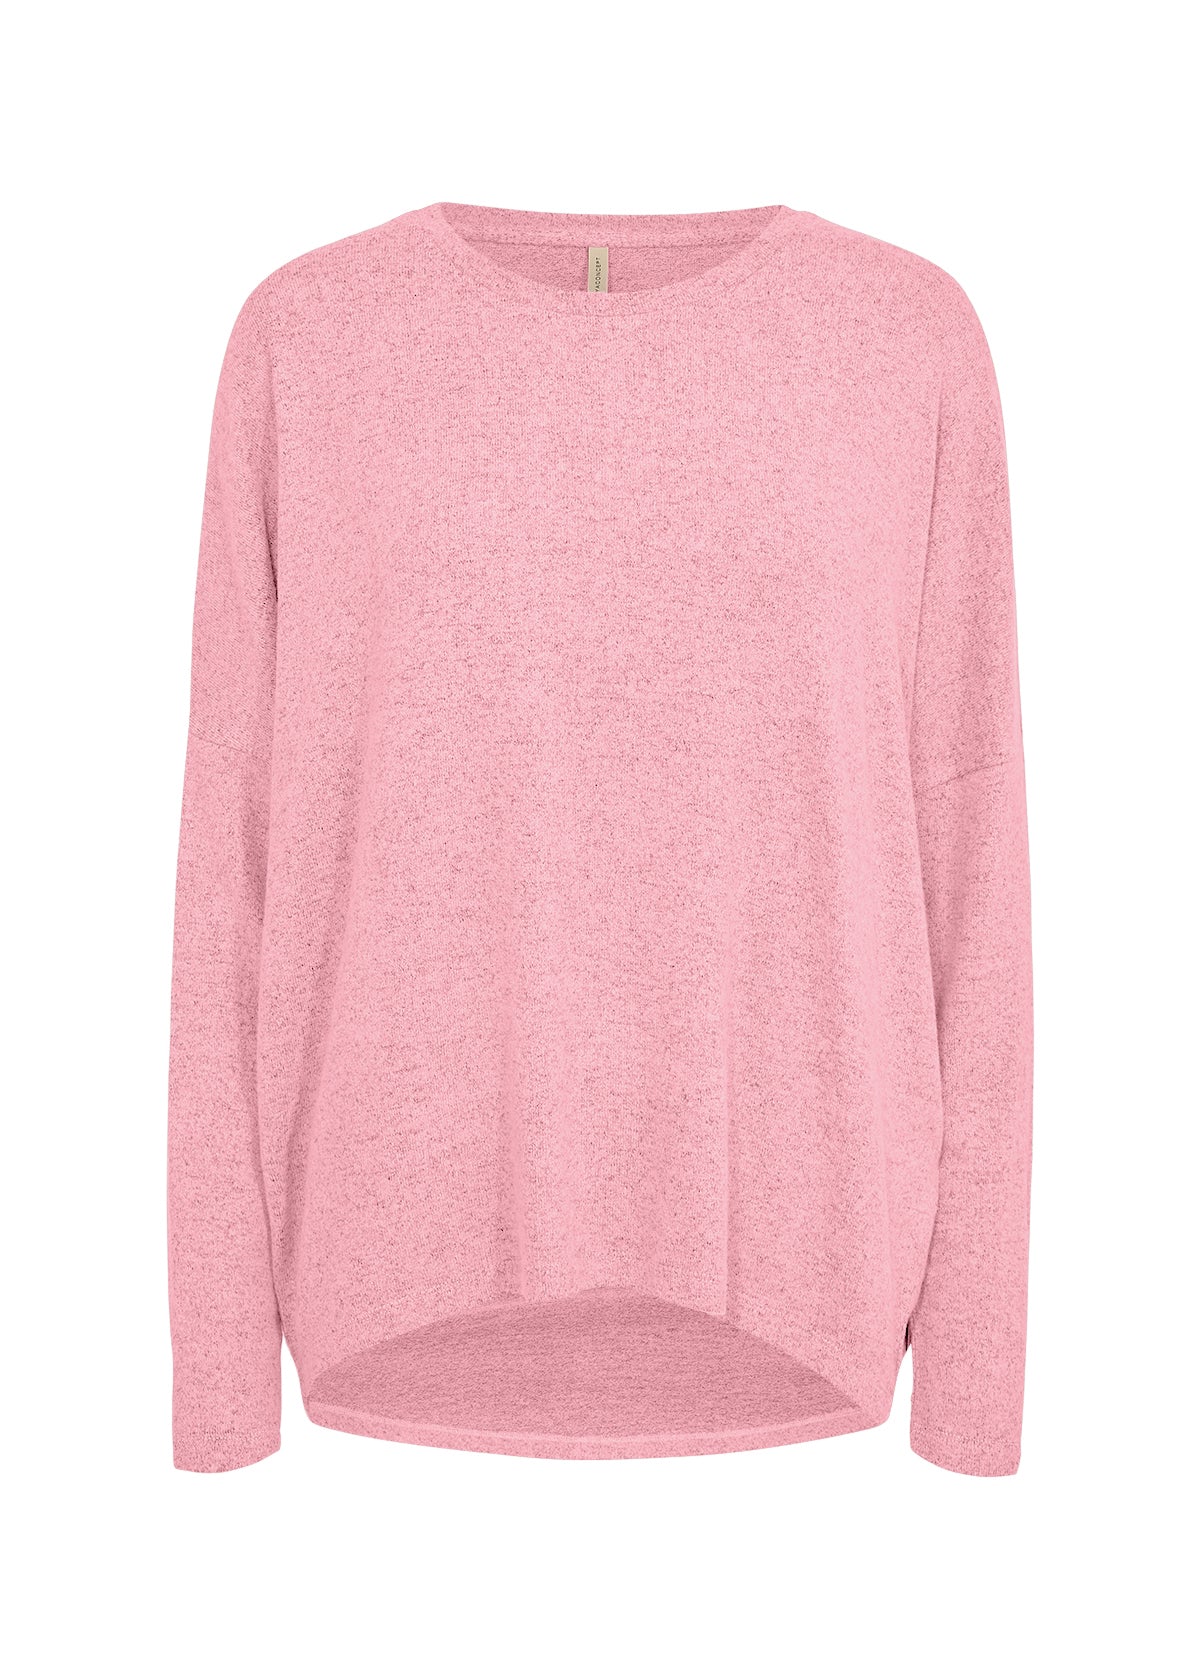 Soya Concept Biara Pink Top